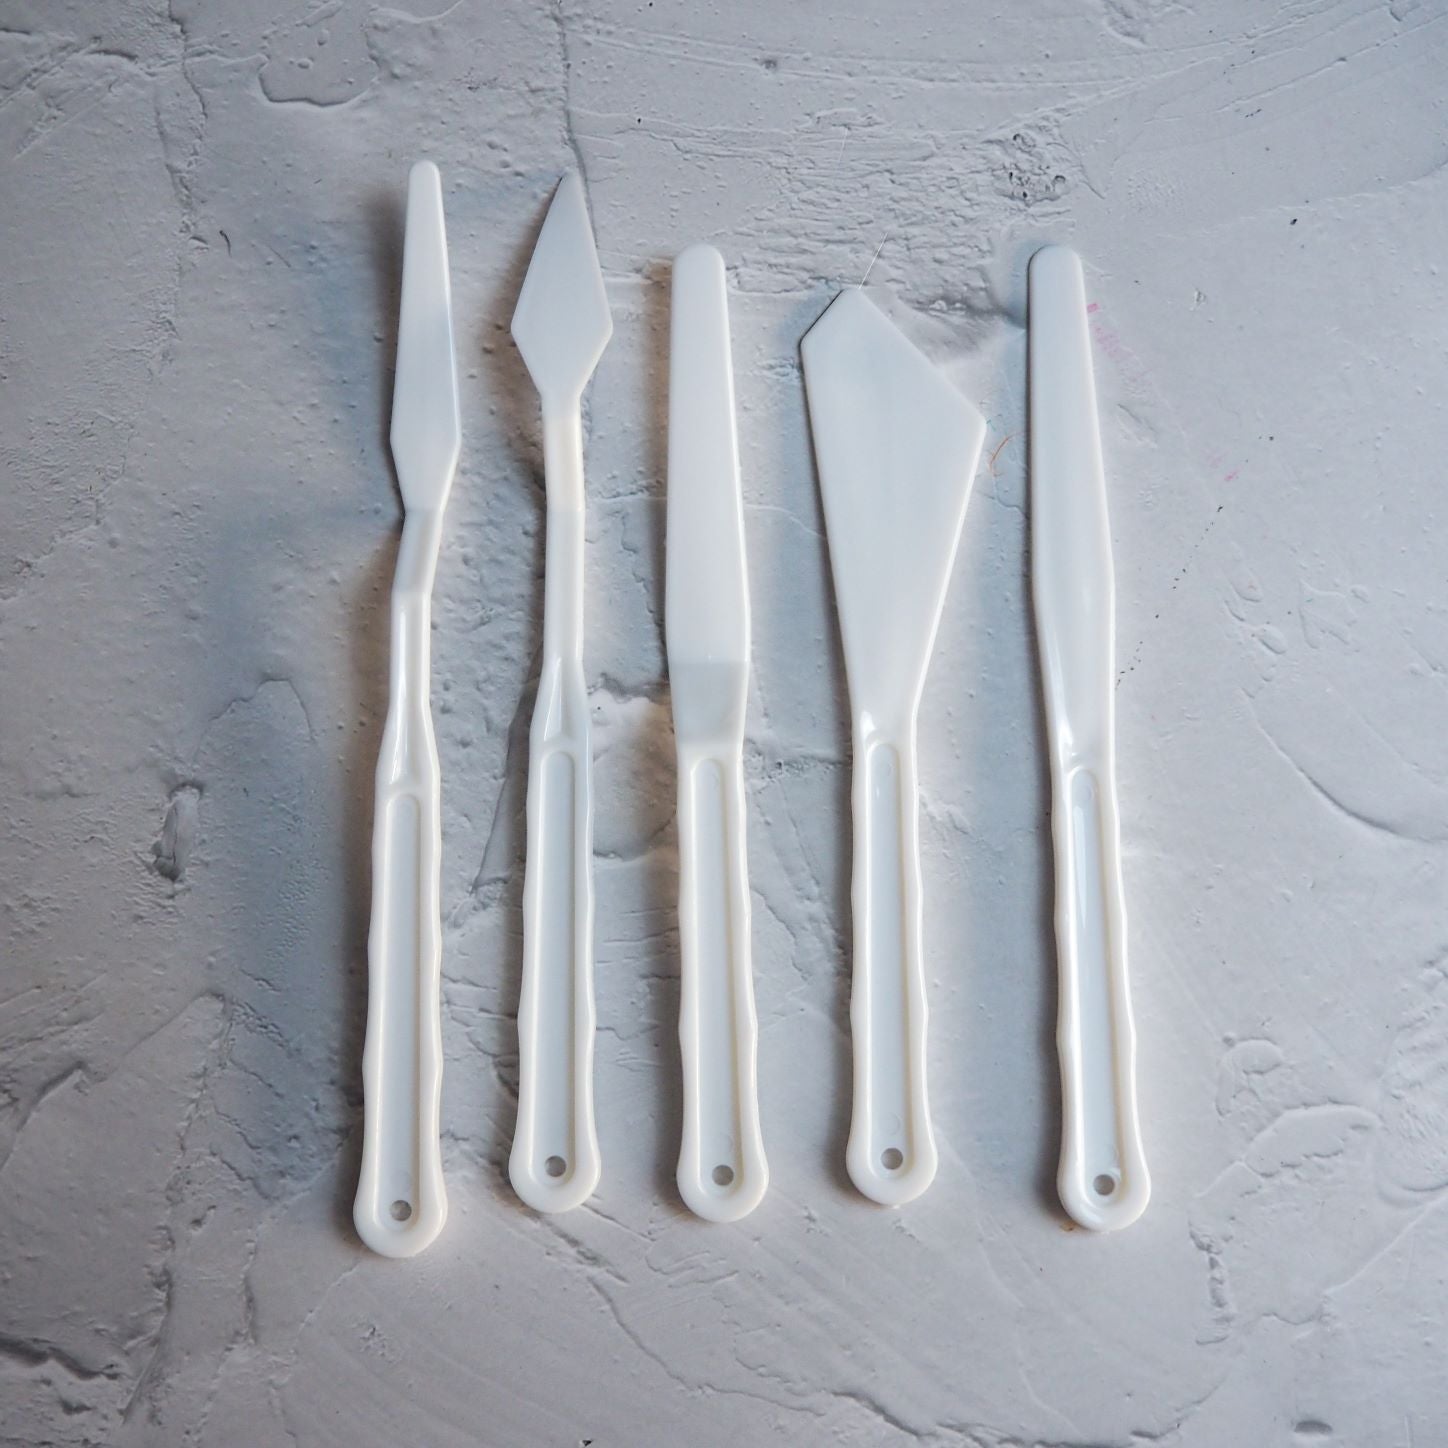 Imagine Crafts Plastic Palette Knives, set of 3 – Artistic Artifacts